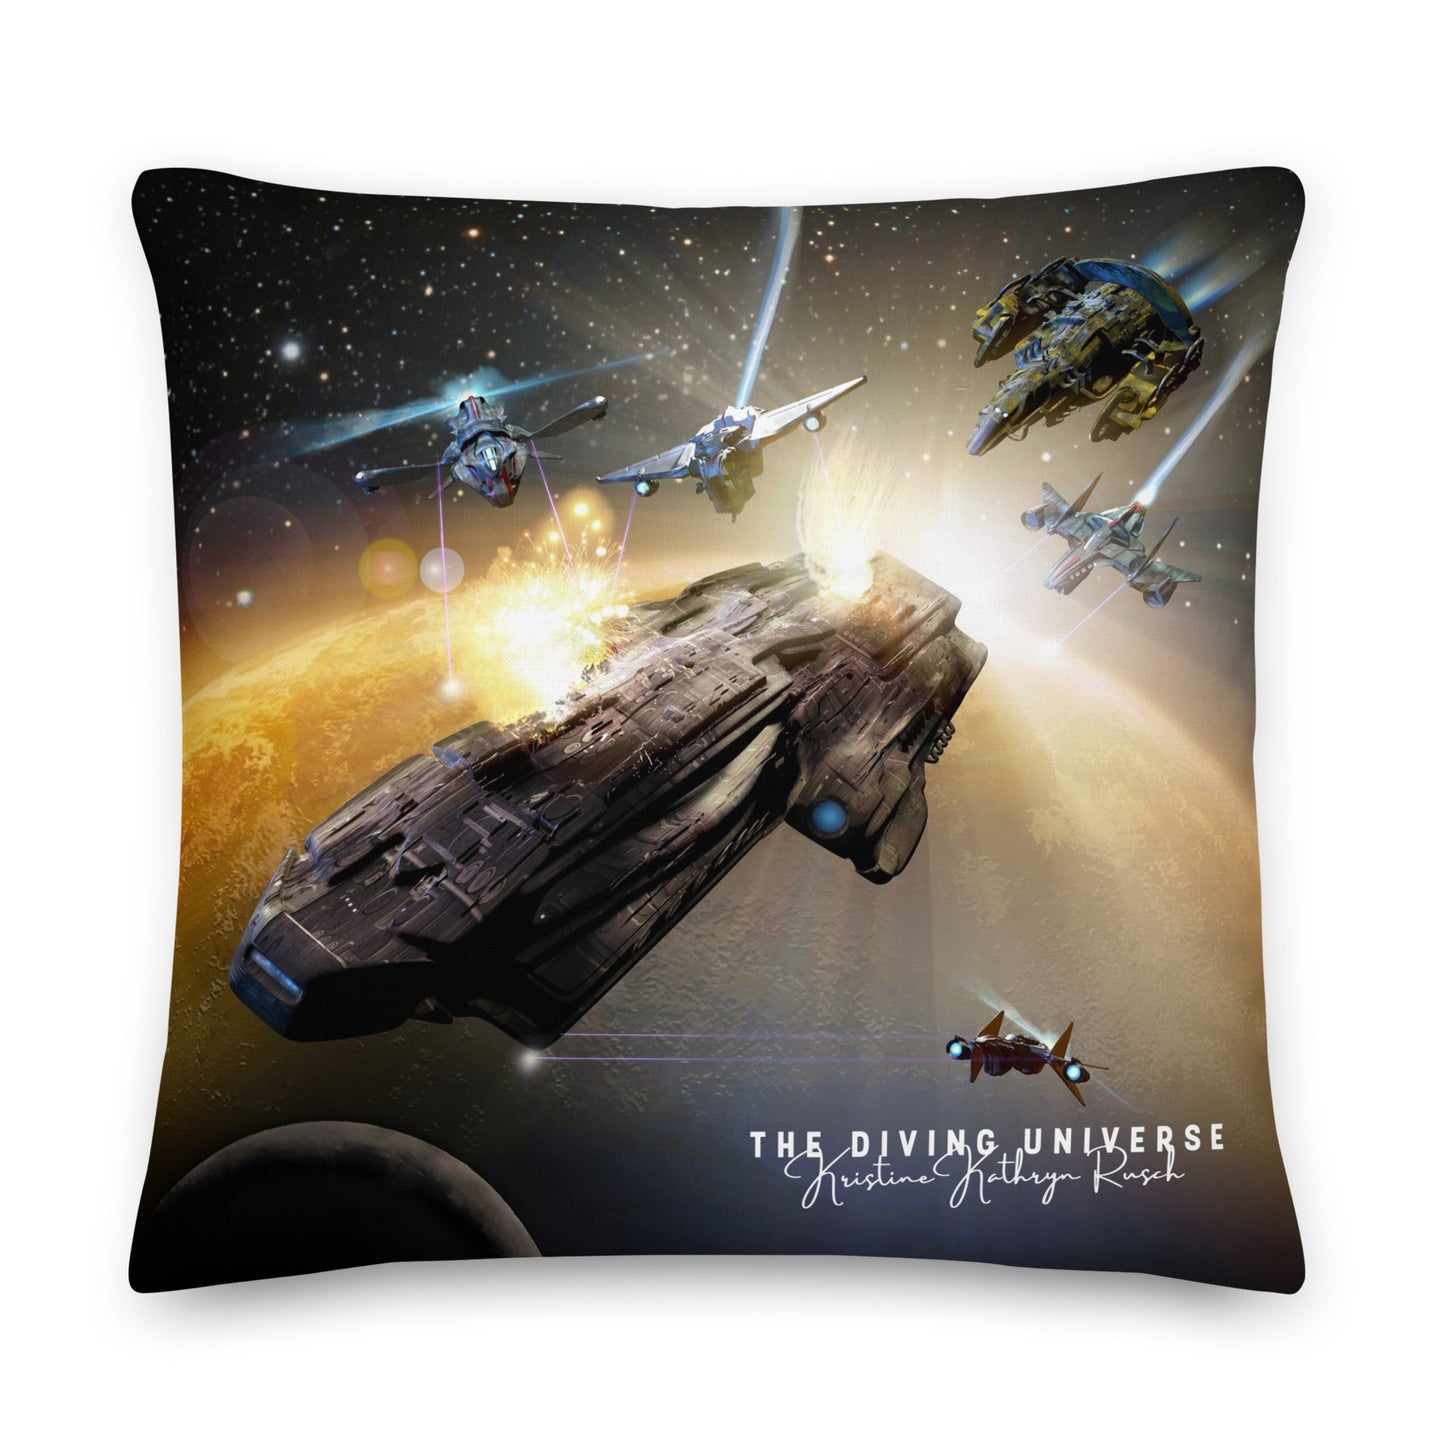 SPACESHIP BATTLE (Black Fire) Premium Pillow - The Diving Universe by Kristine Kathryn Rusch